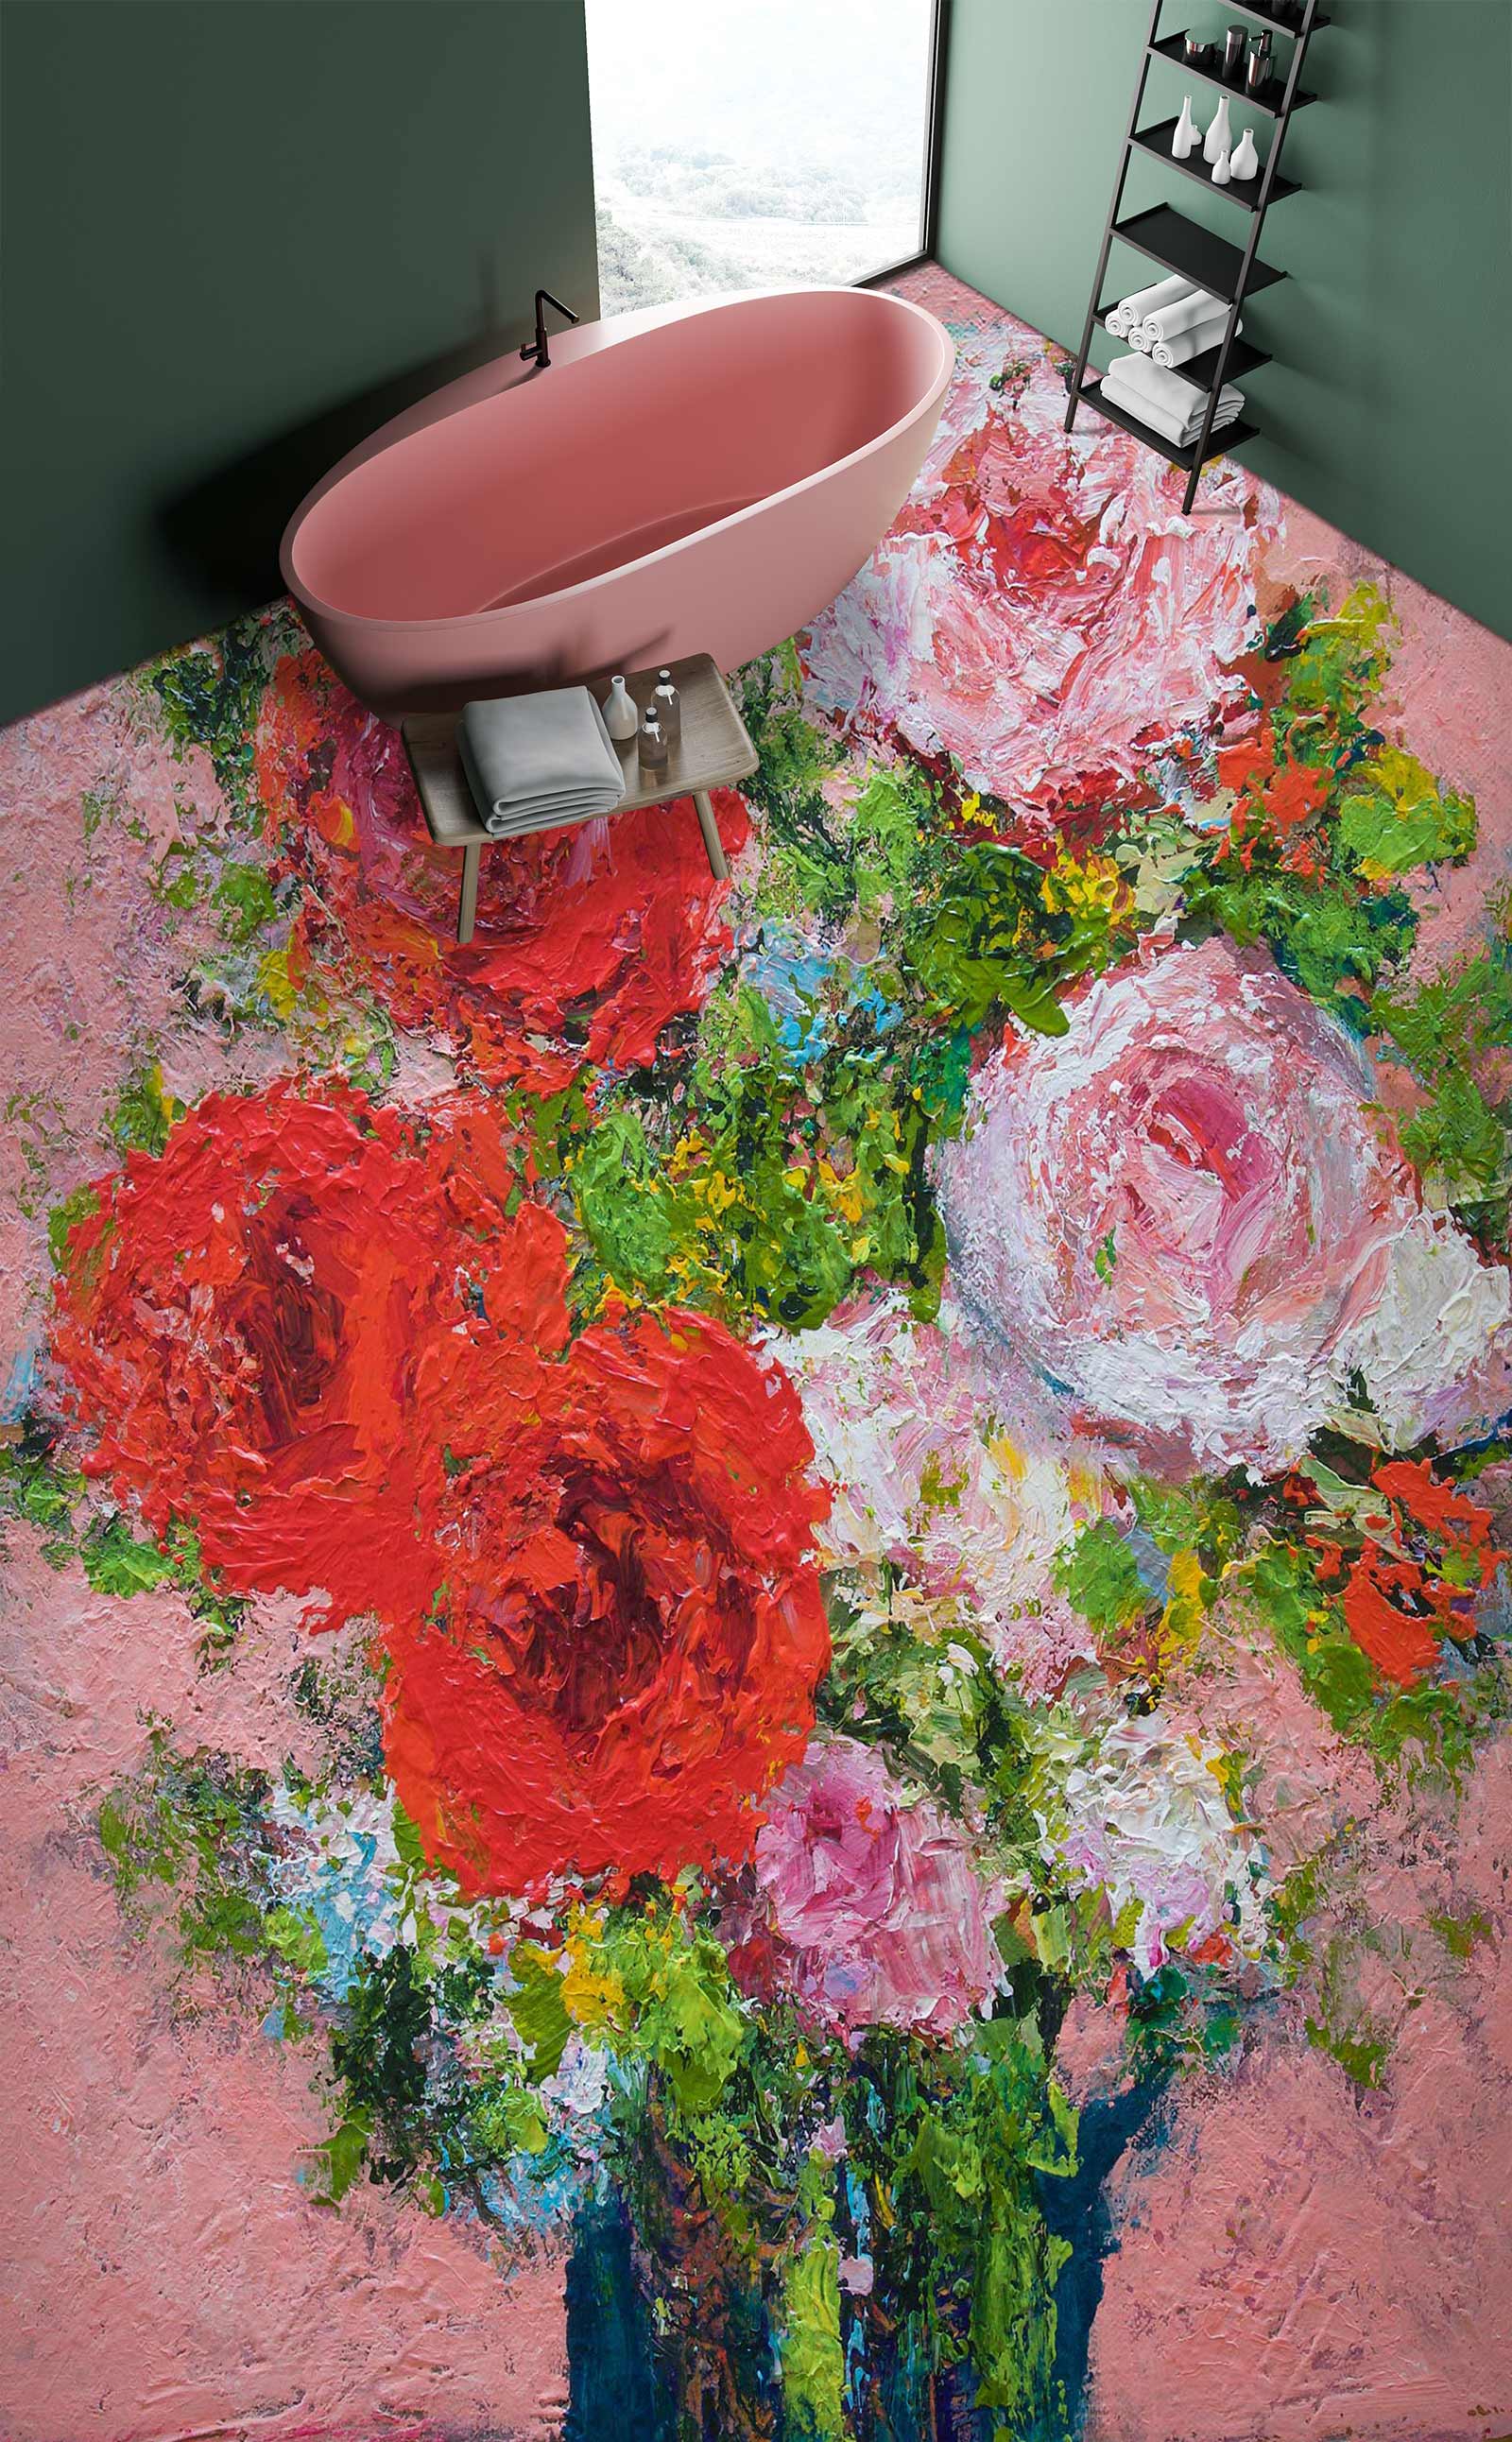 3D Red Pink Rose Flower 9699 Allan P. Friedlander Floor Mural  Wallpaper Murals Self-Adhesive Removable Print Epoxy